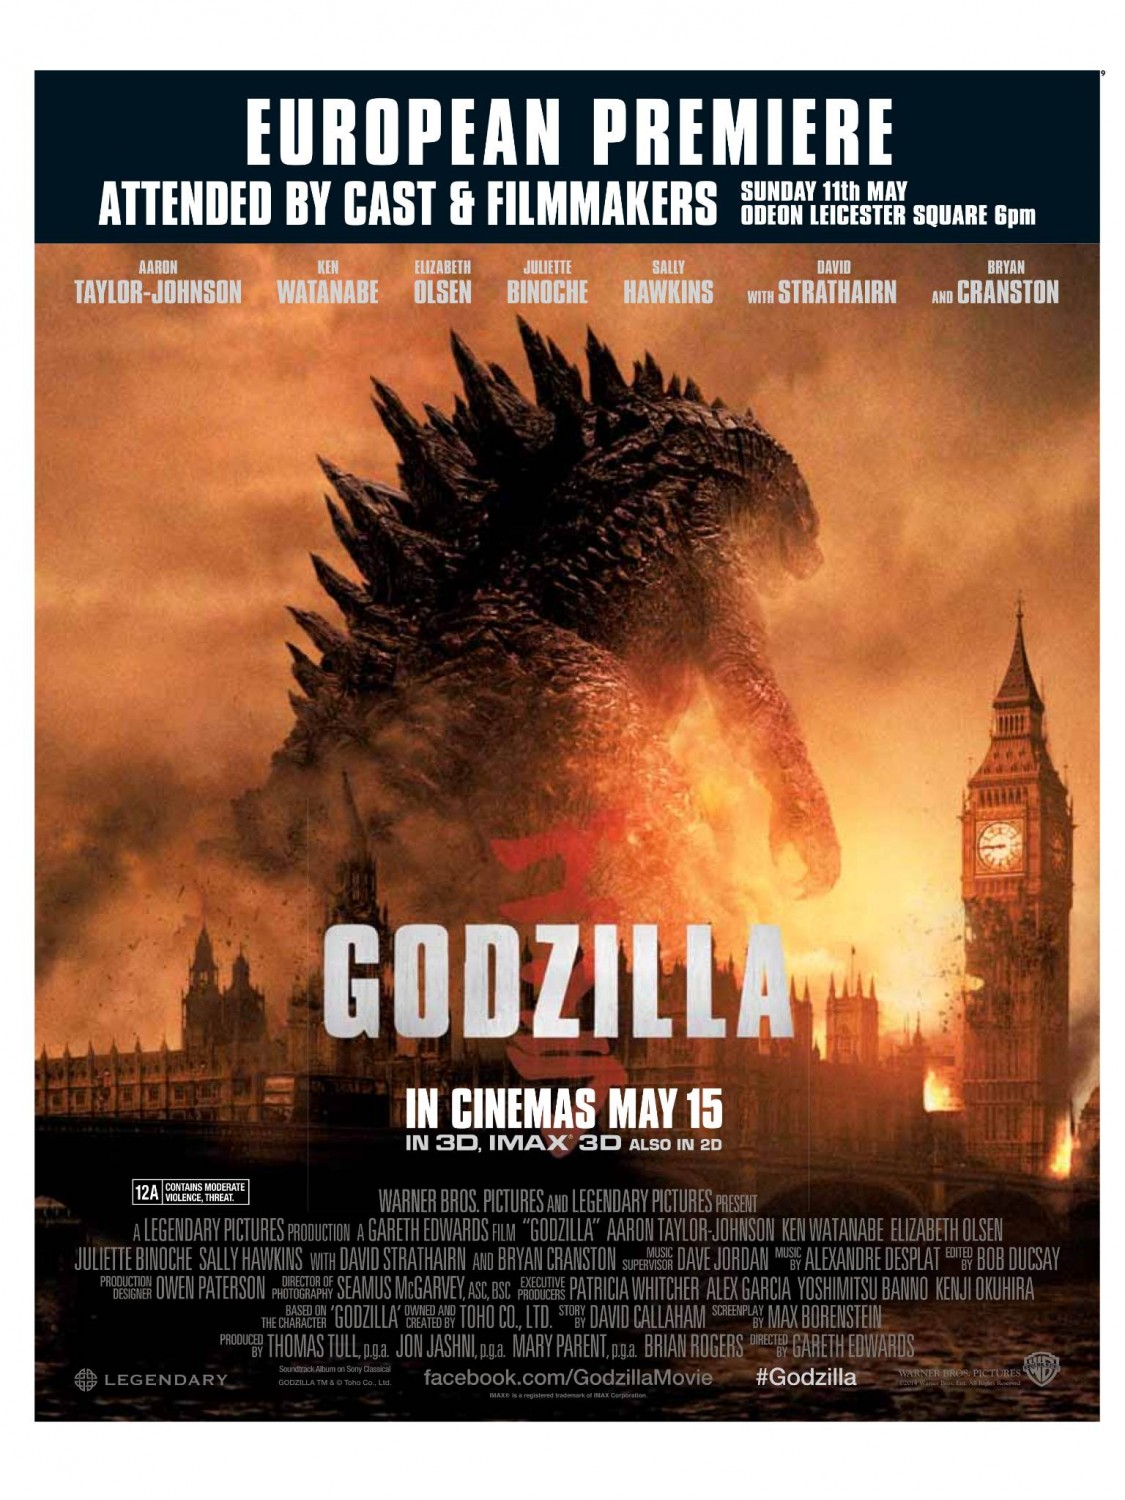 Extra Large Movie Poster Image for Godzilla (#17 of 22)